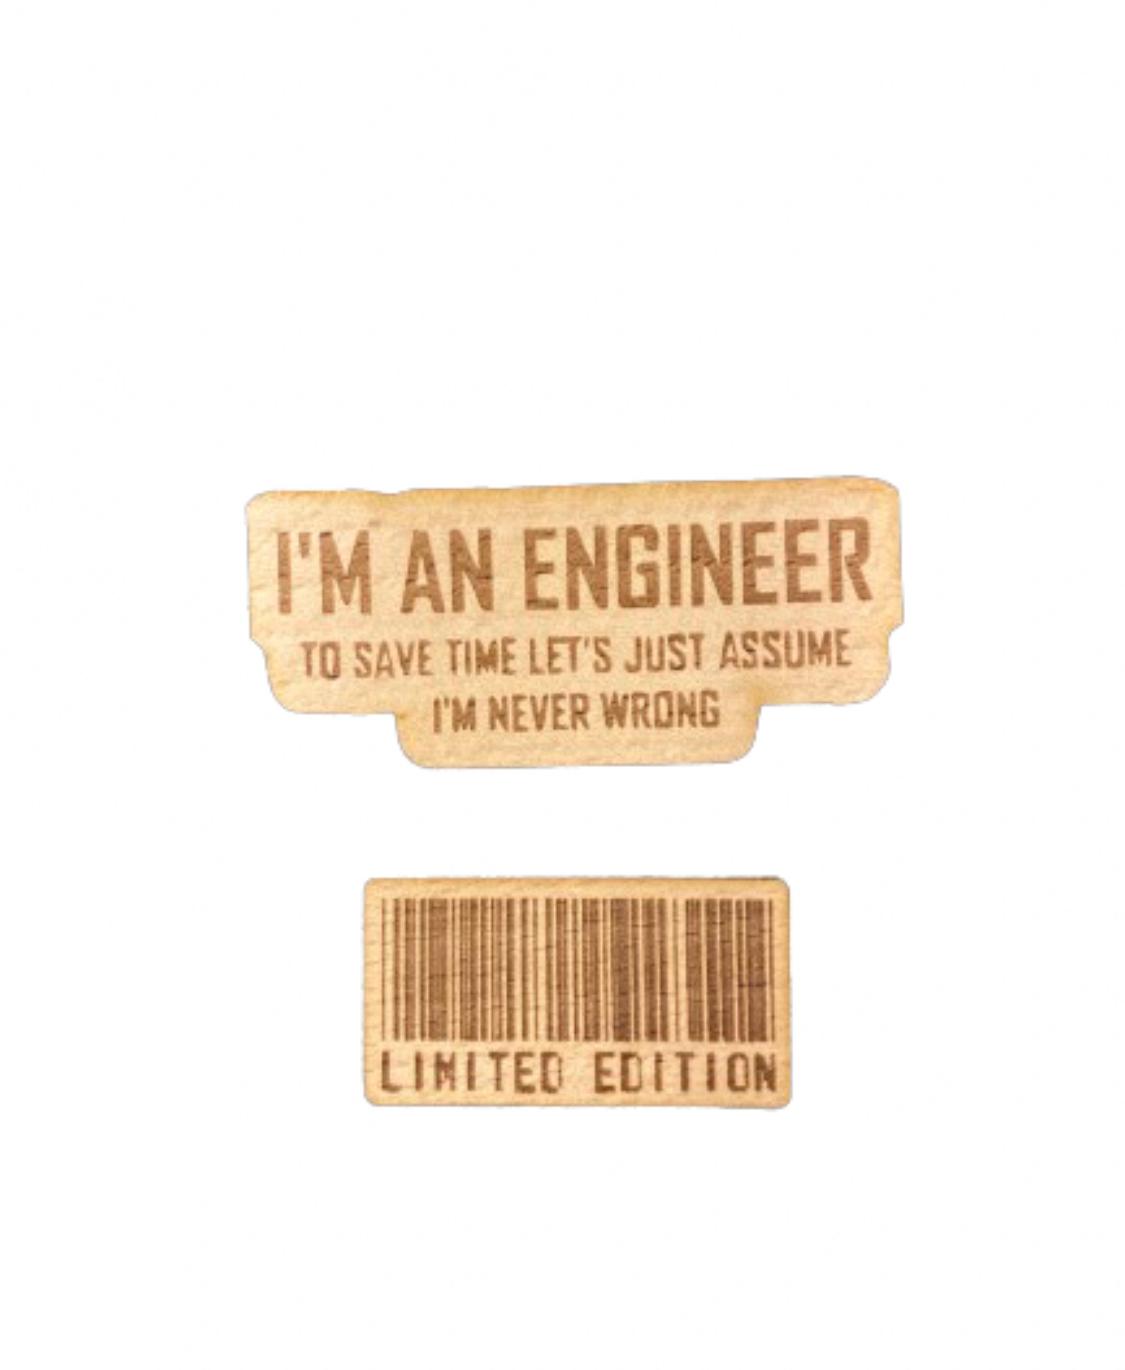 ملصق I'M AN ENGINNER - LIMTED EDITION